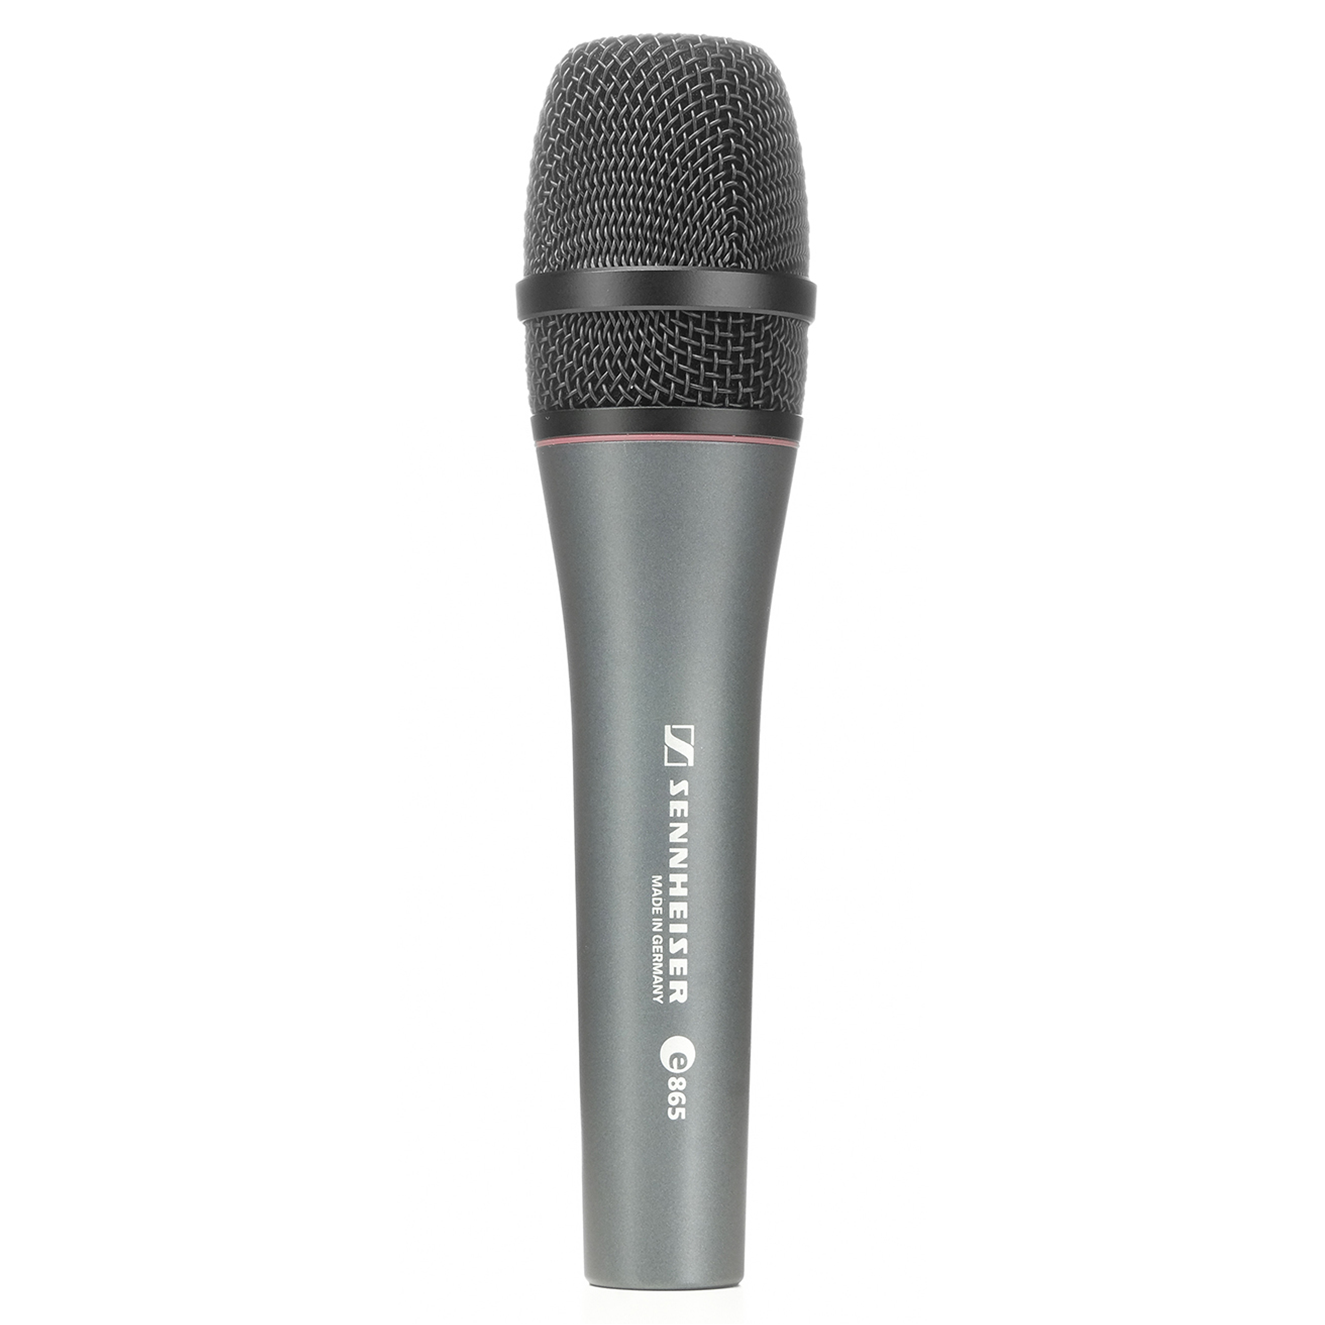 Sennheiser E 865 microfoon – Systems